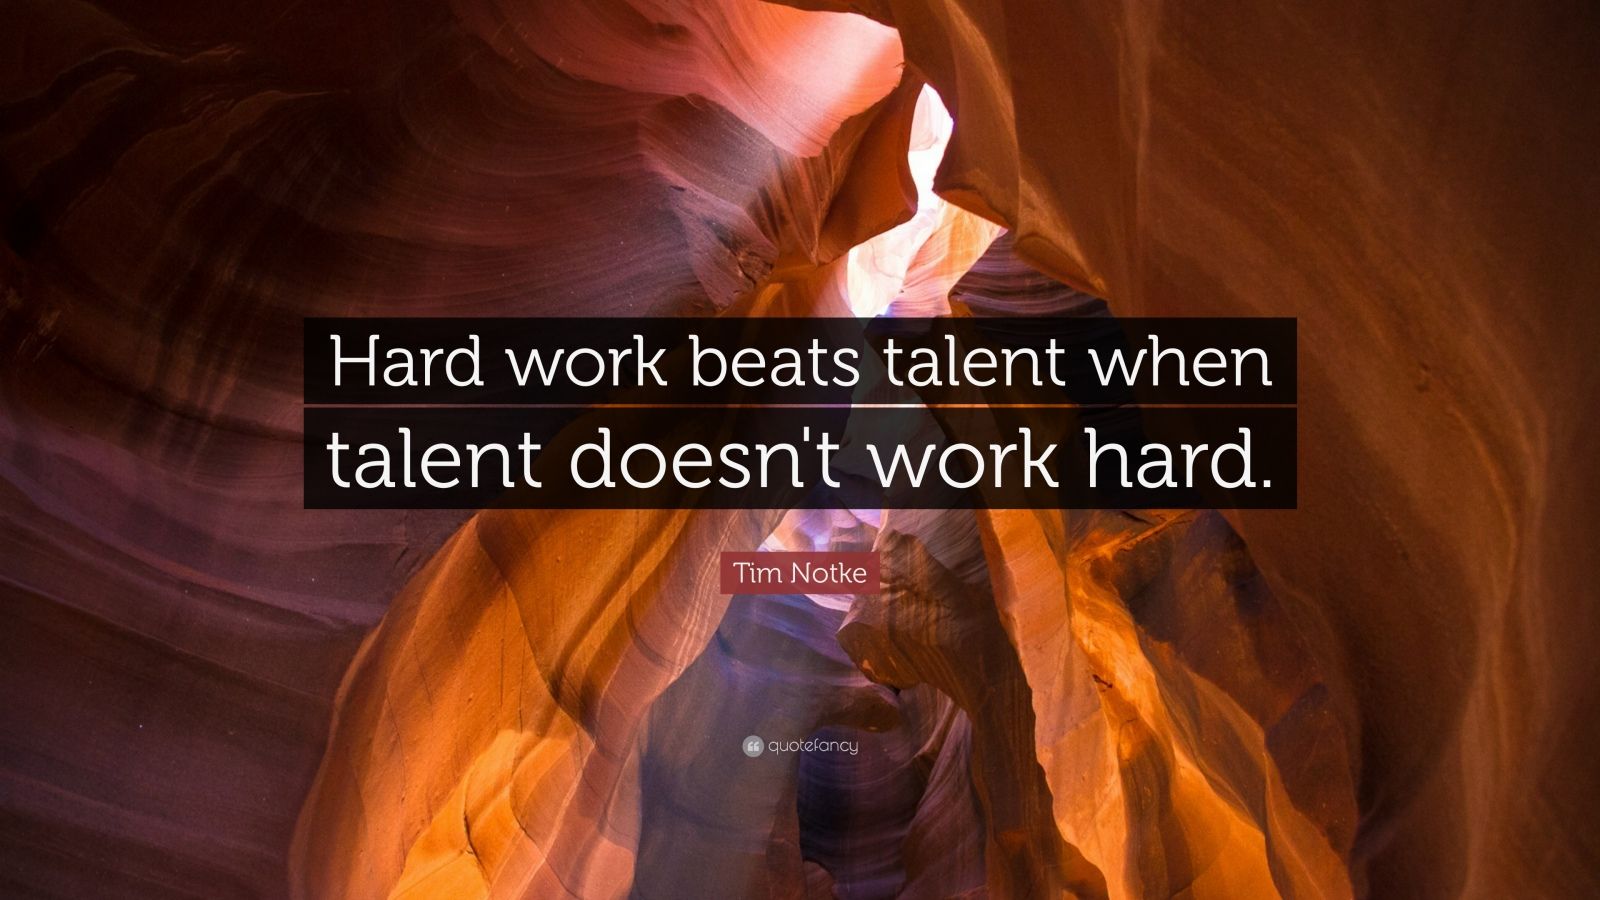 Tim Notke Quote: “Hard Work Beats Talent When Talent Doesn'T Work Hard